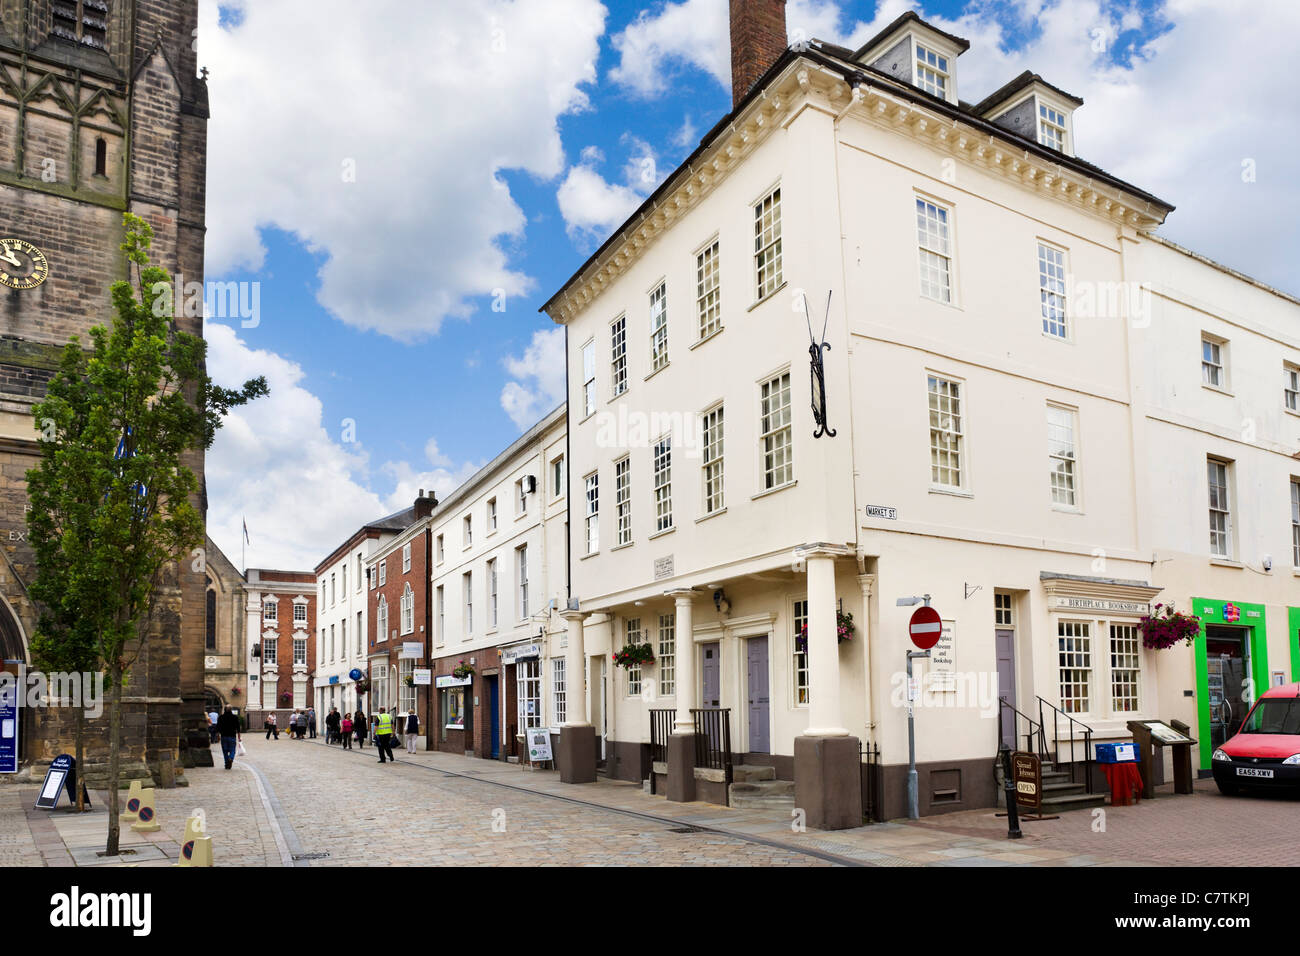 The Samuel Johnson Birthplace Museum in Market Square, Lichfield, Staffordshire, England, UK Stock Photo